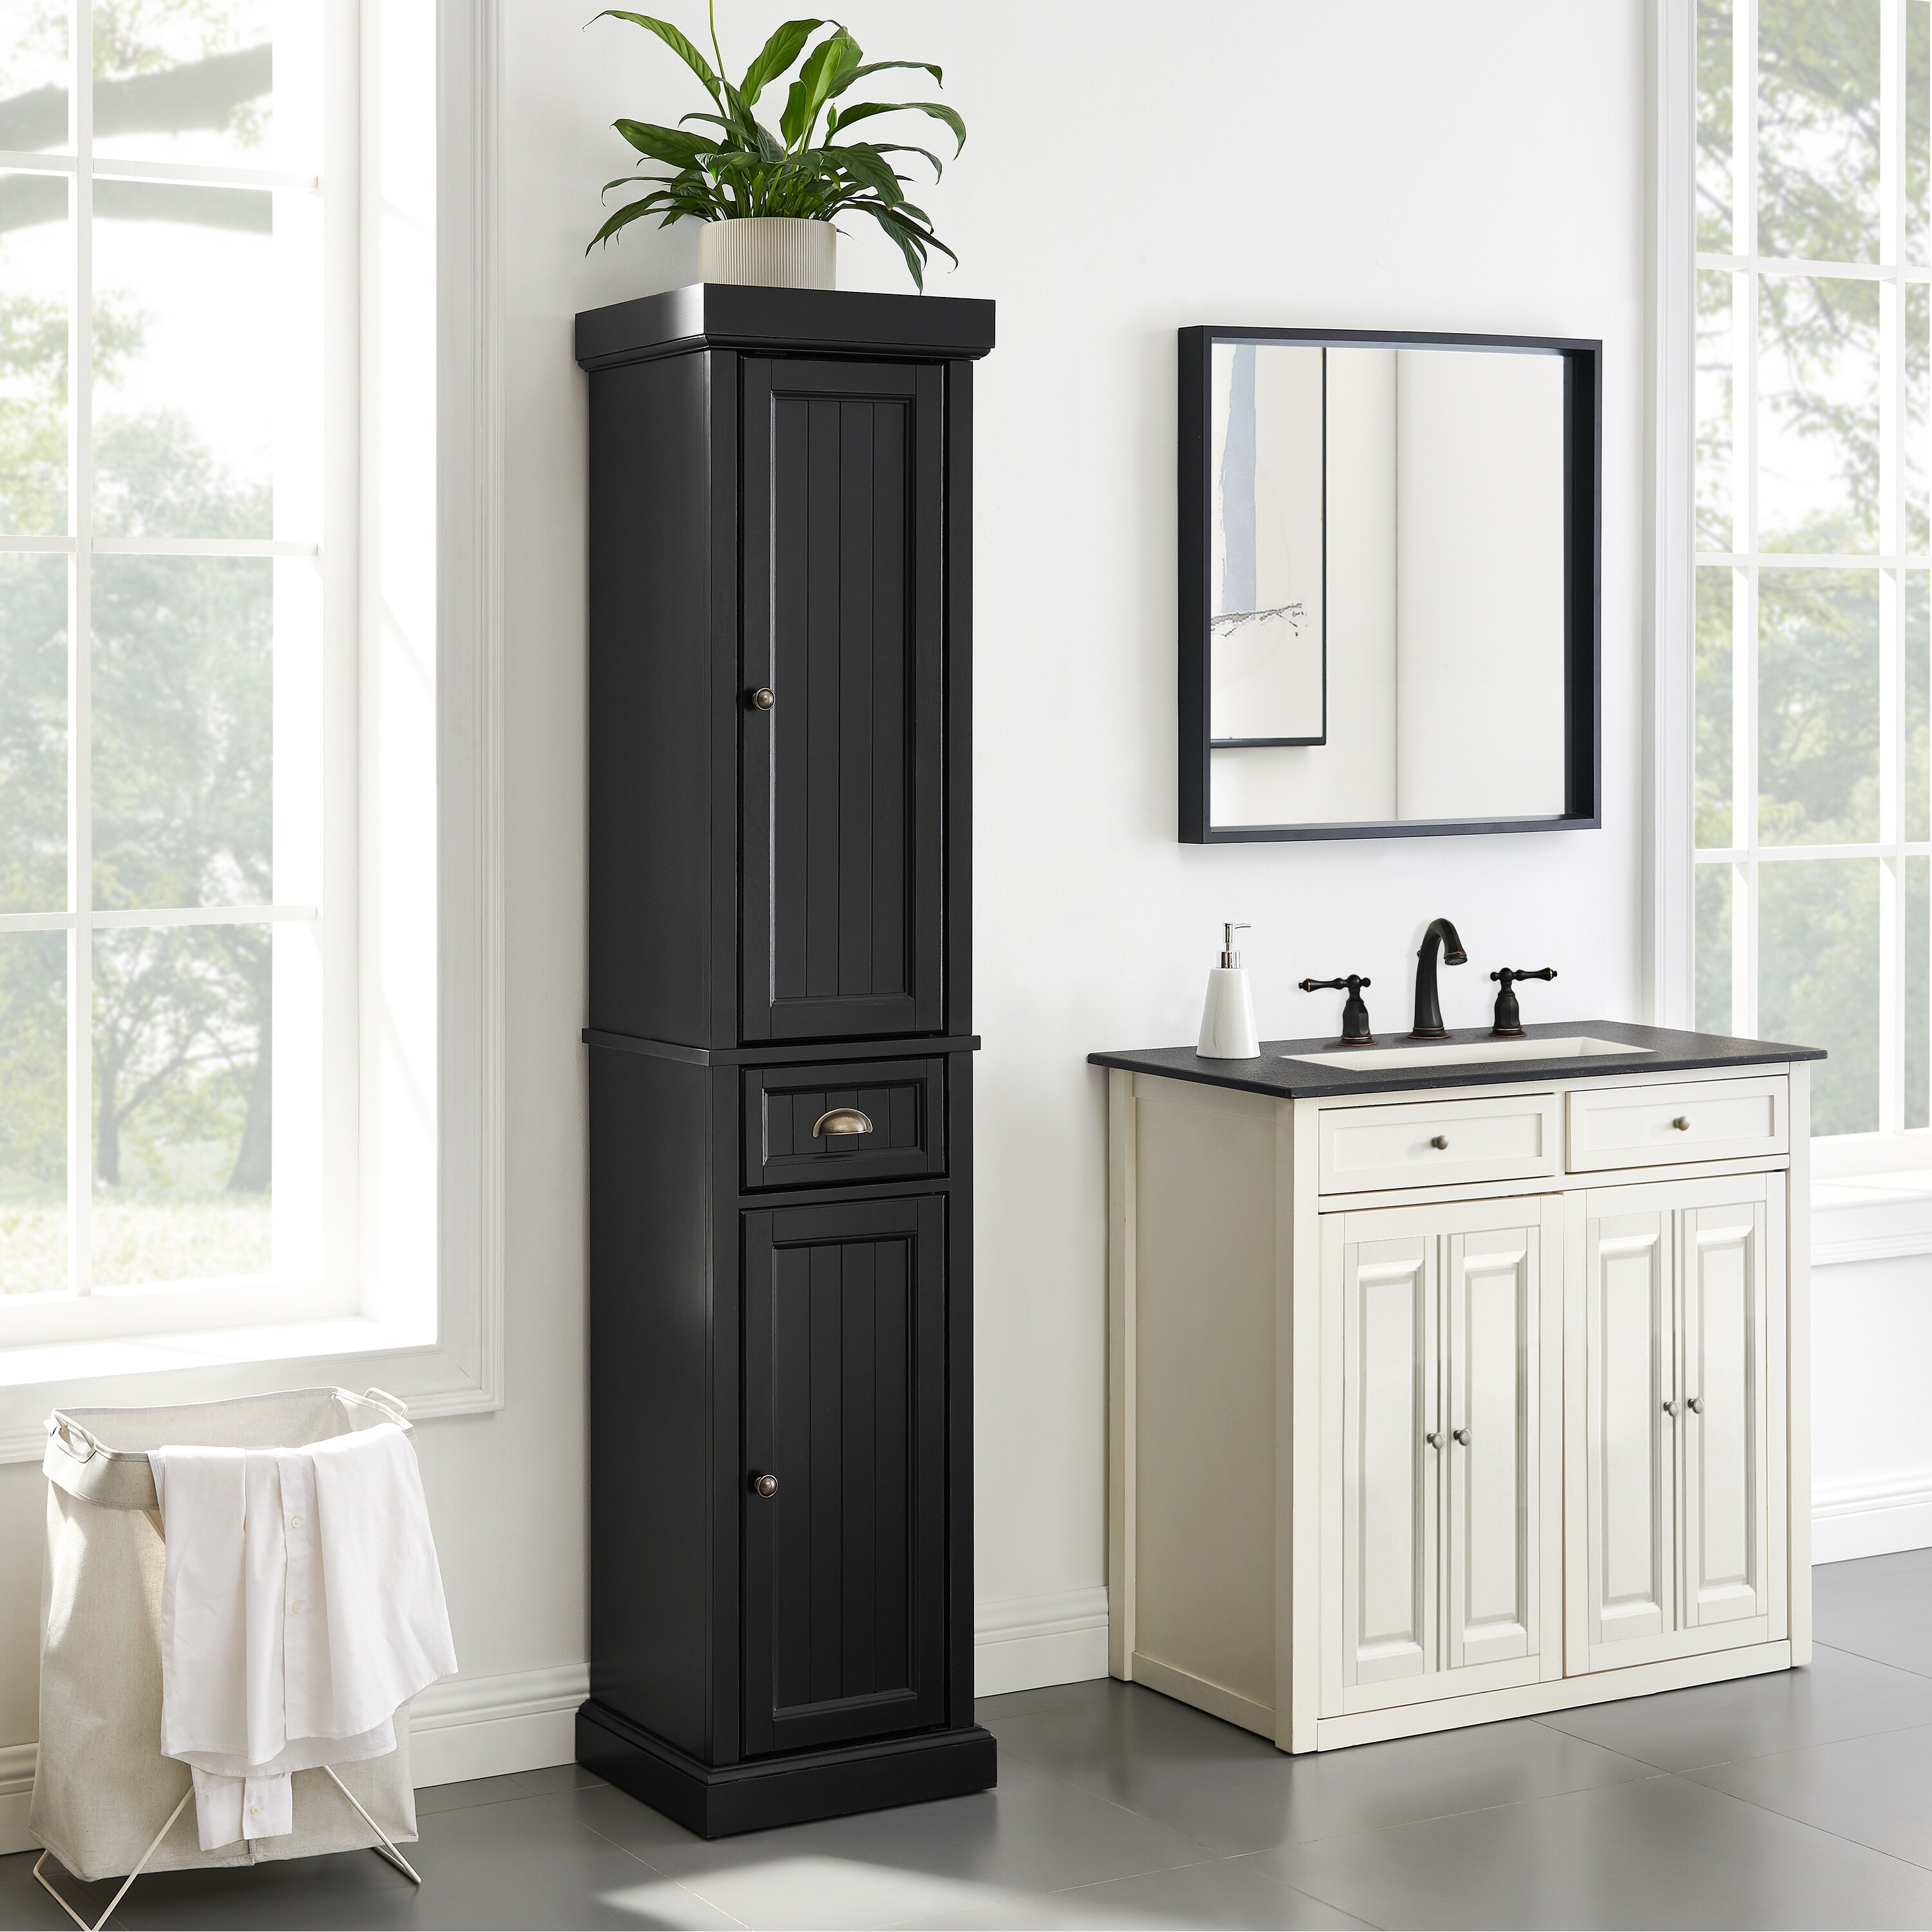 Bathroom Storage Cabinet, Floor Standing Narrow Tall Bathroom Cabinet  Storage Tower with Door and Drawer, Bath Cabinet Stand Alone, Black